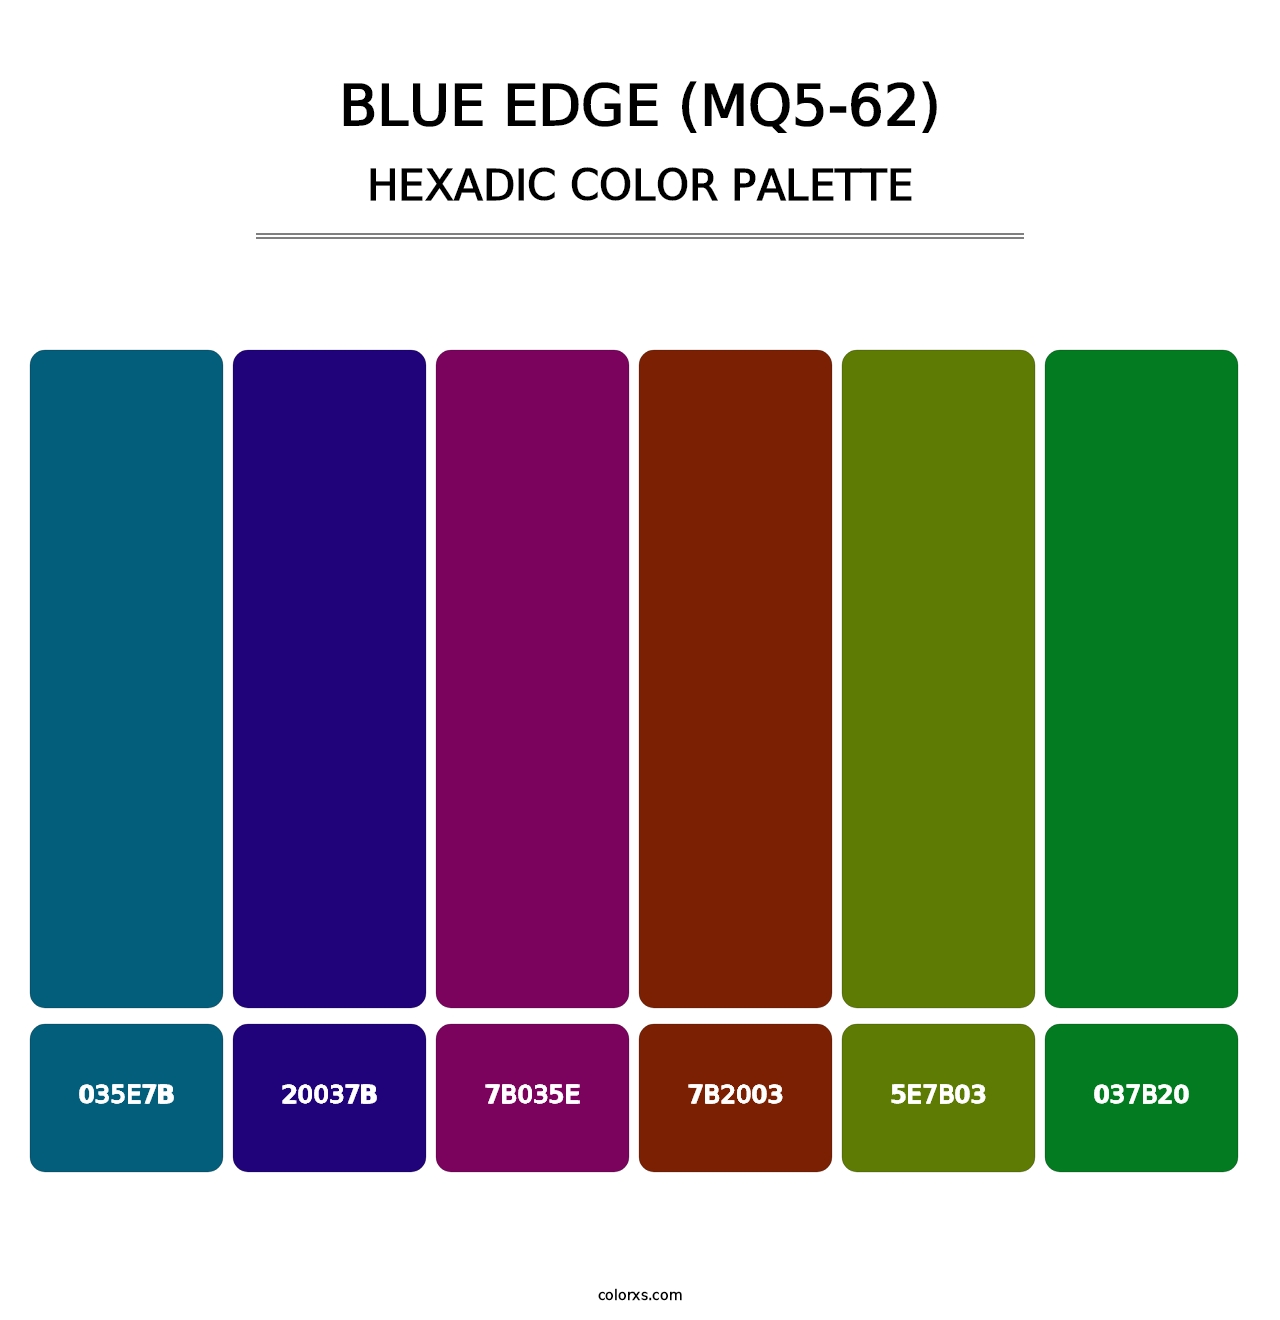 Blue Edge (MQ5-62) - Hexadic Color Palette